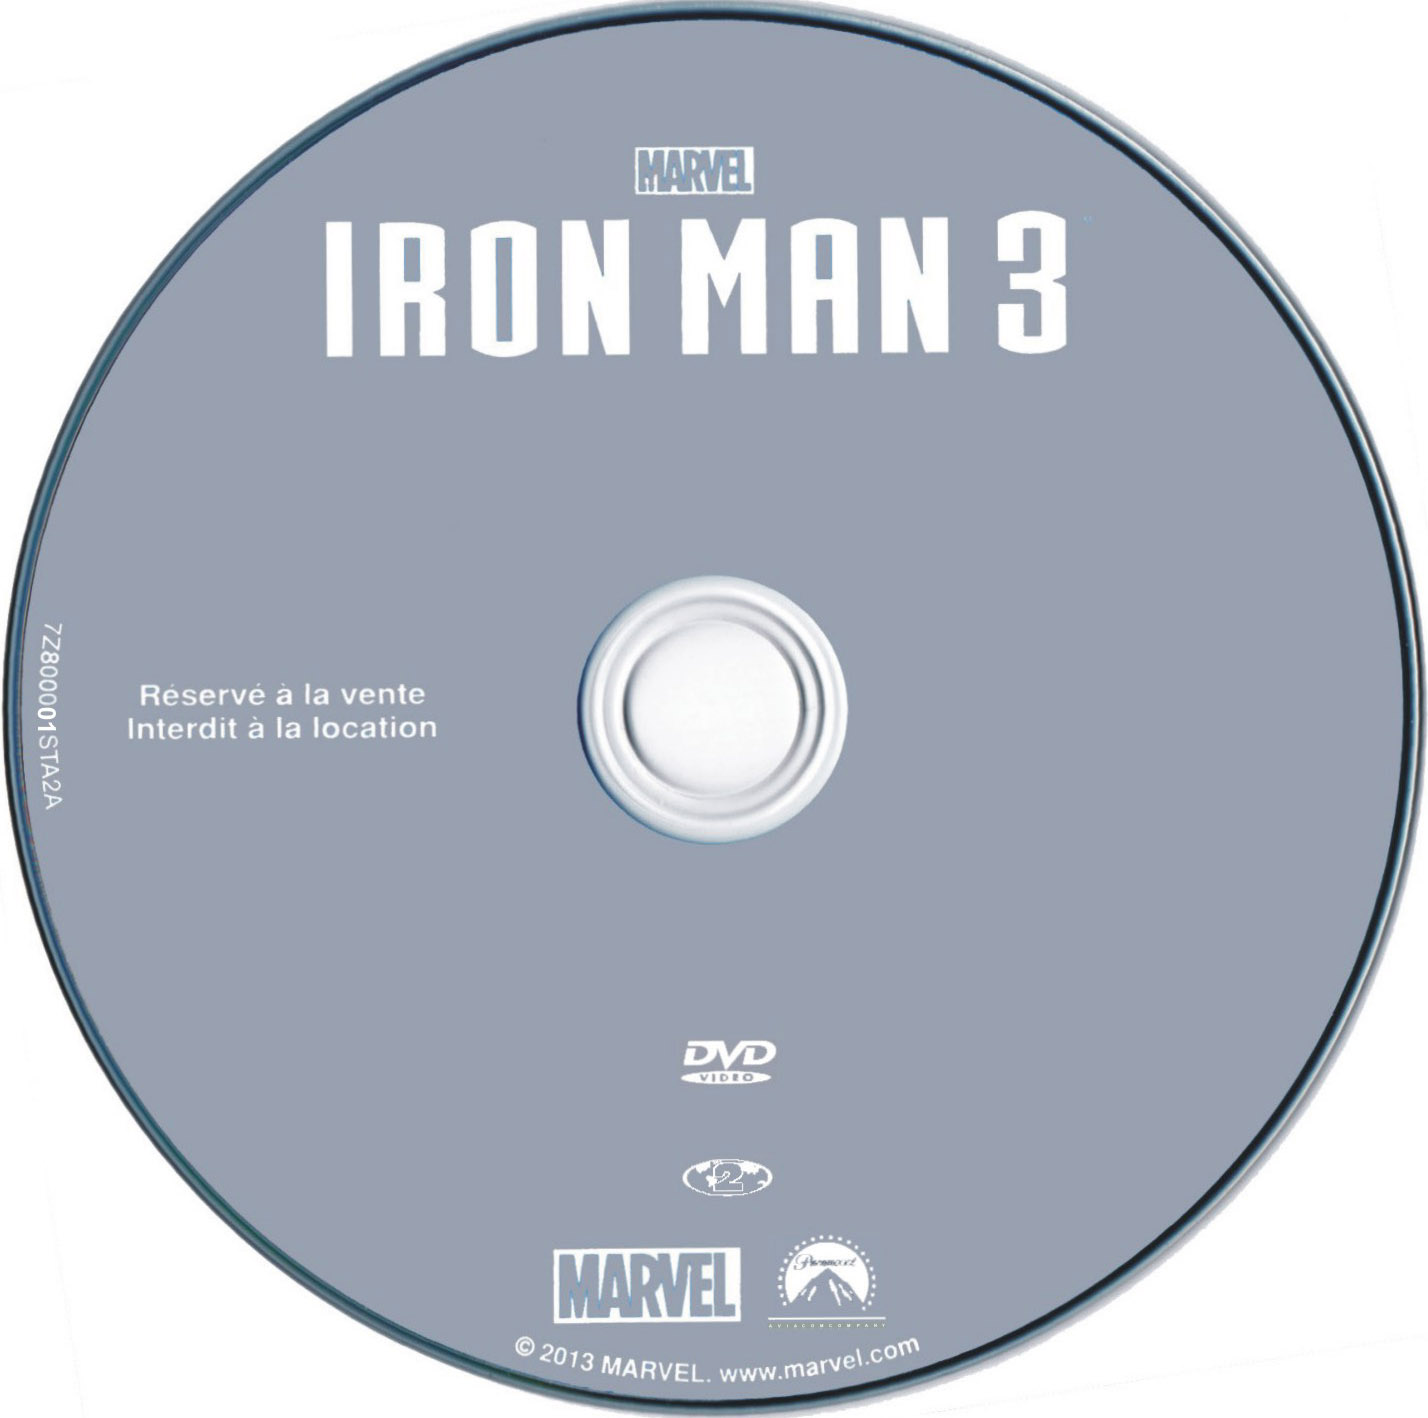 Iron man 3 v2